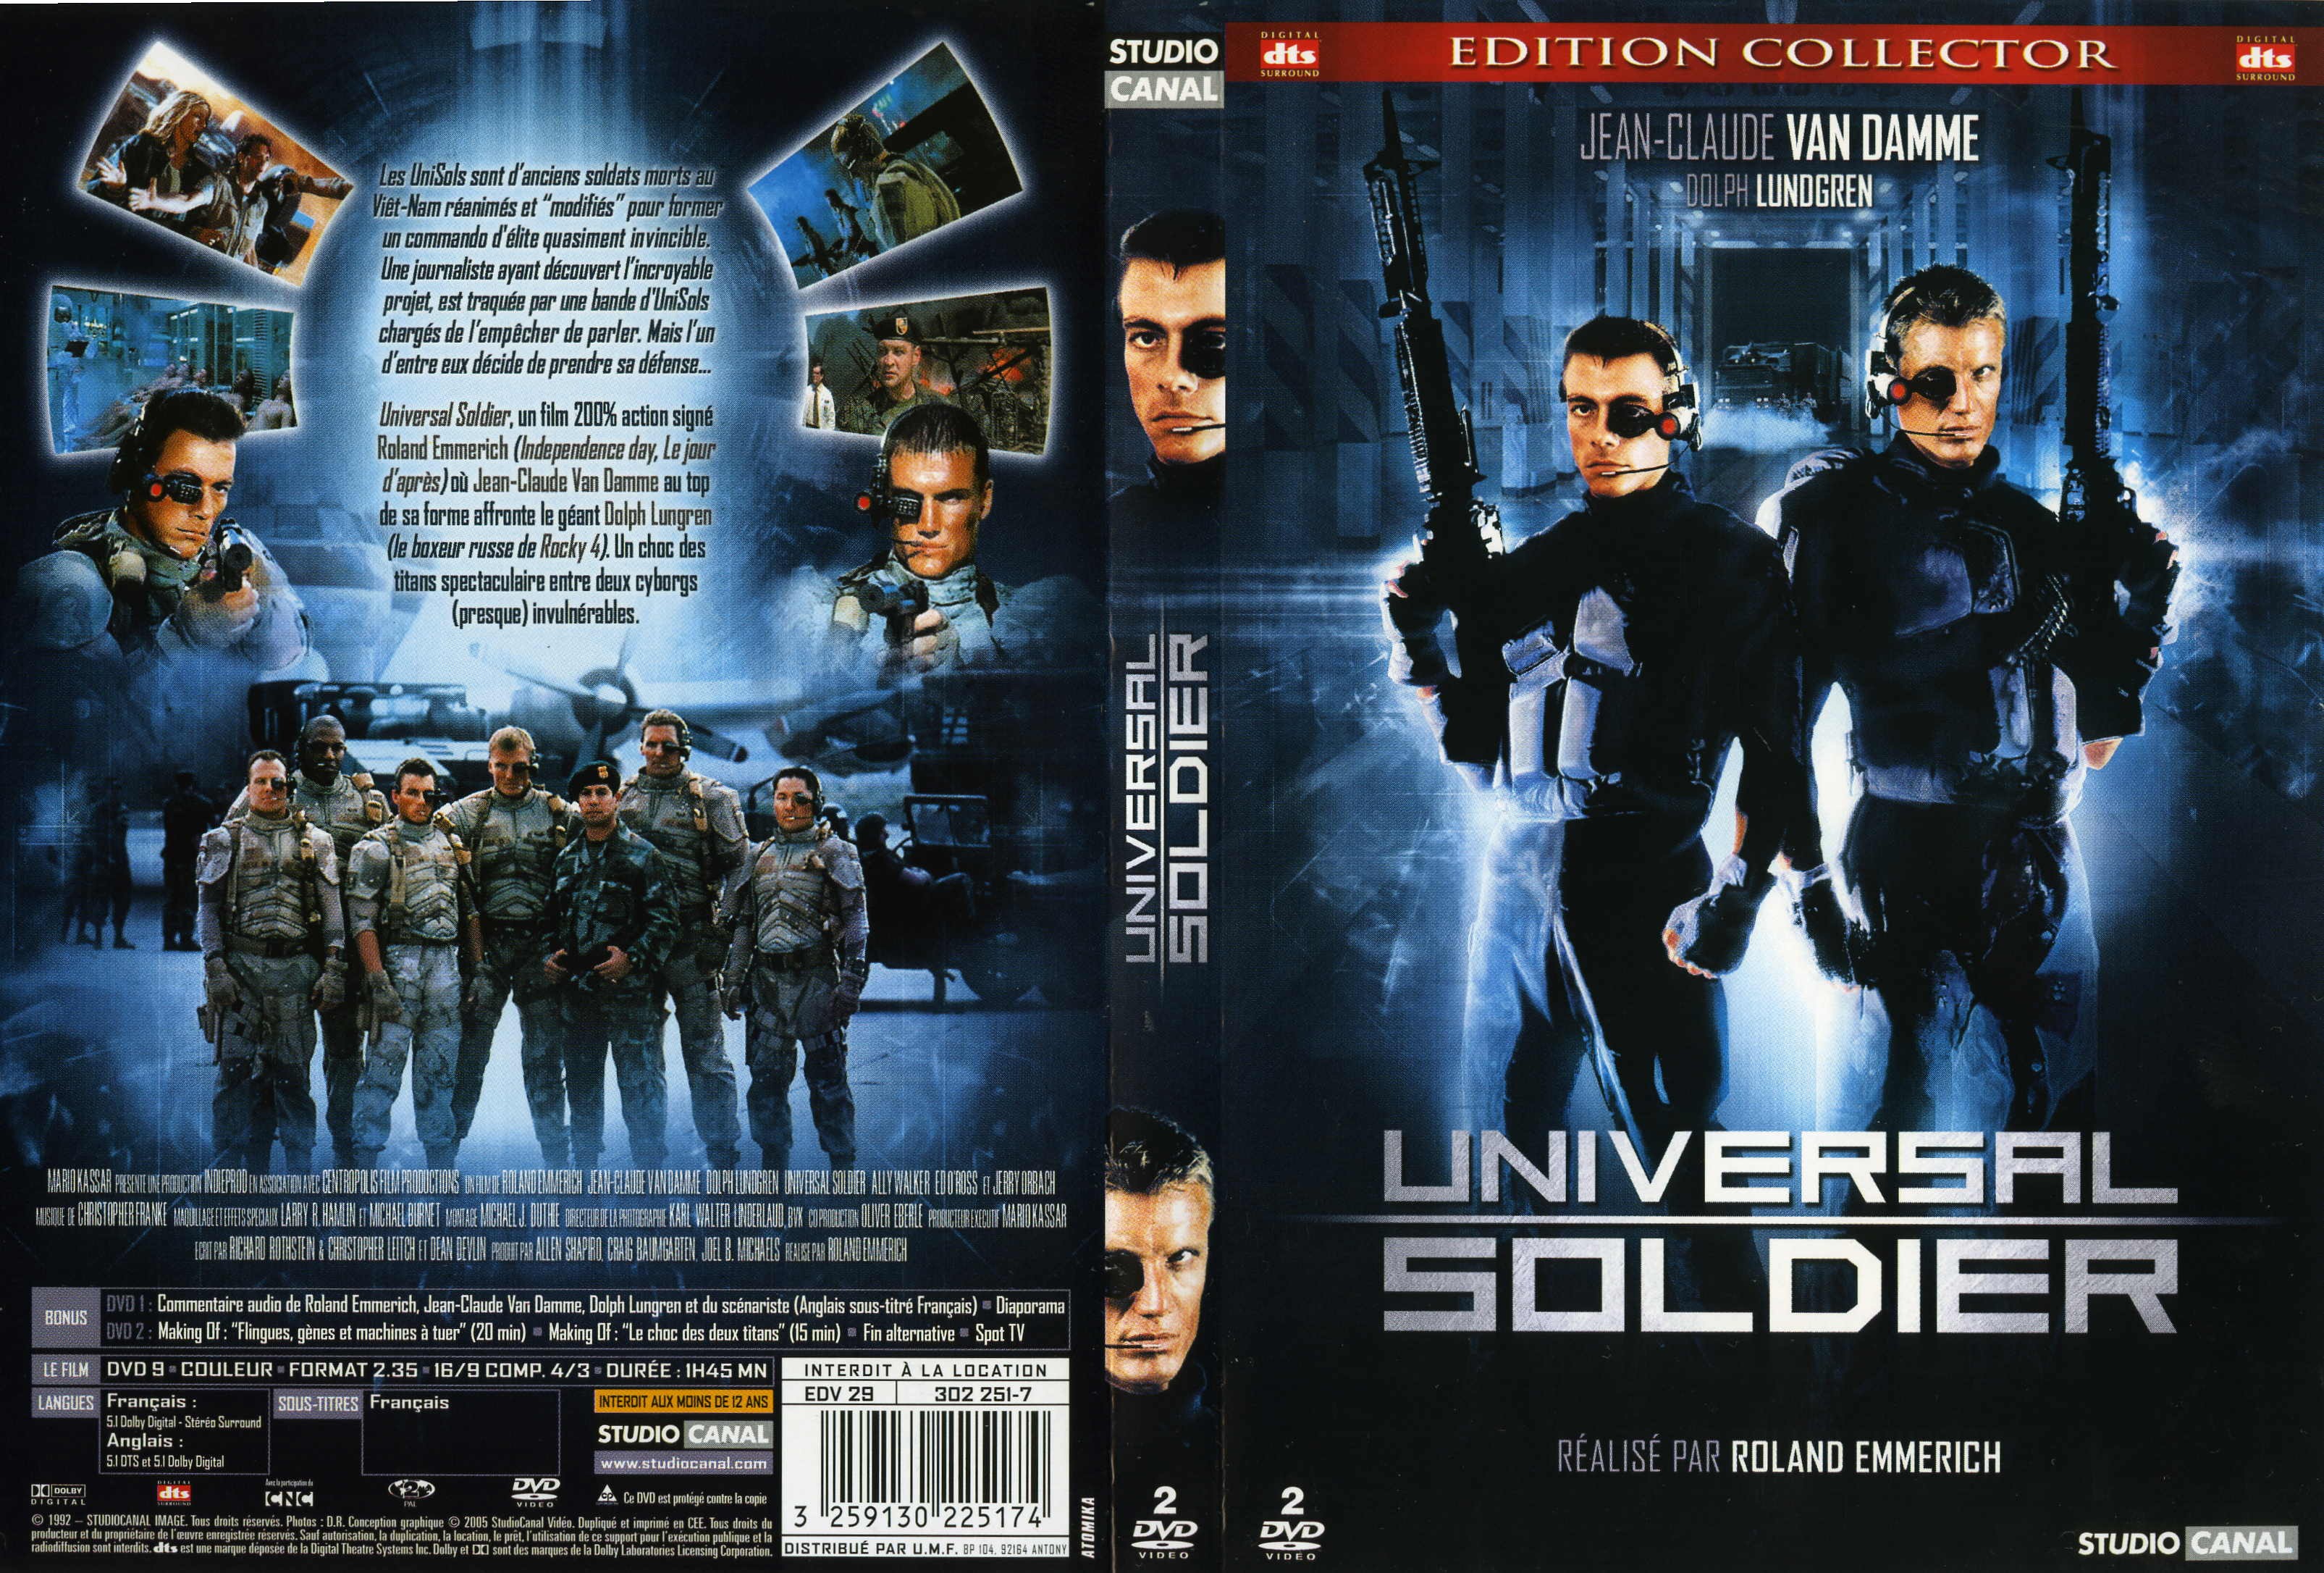 Jaquette DVD Universal soldier